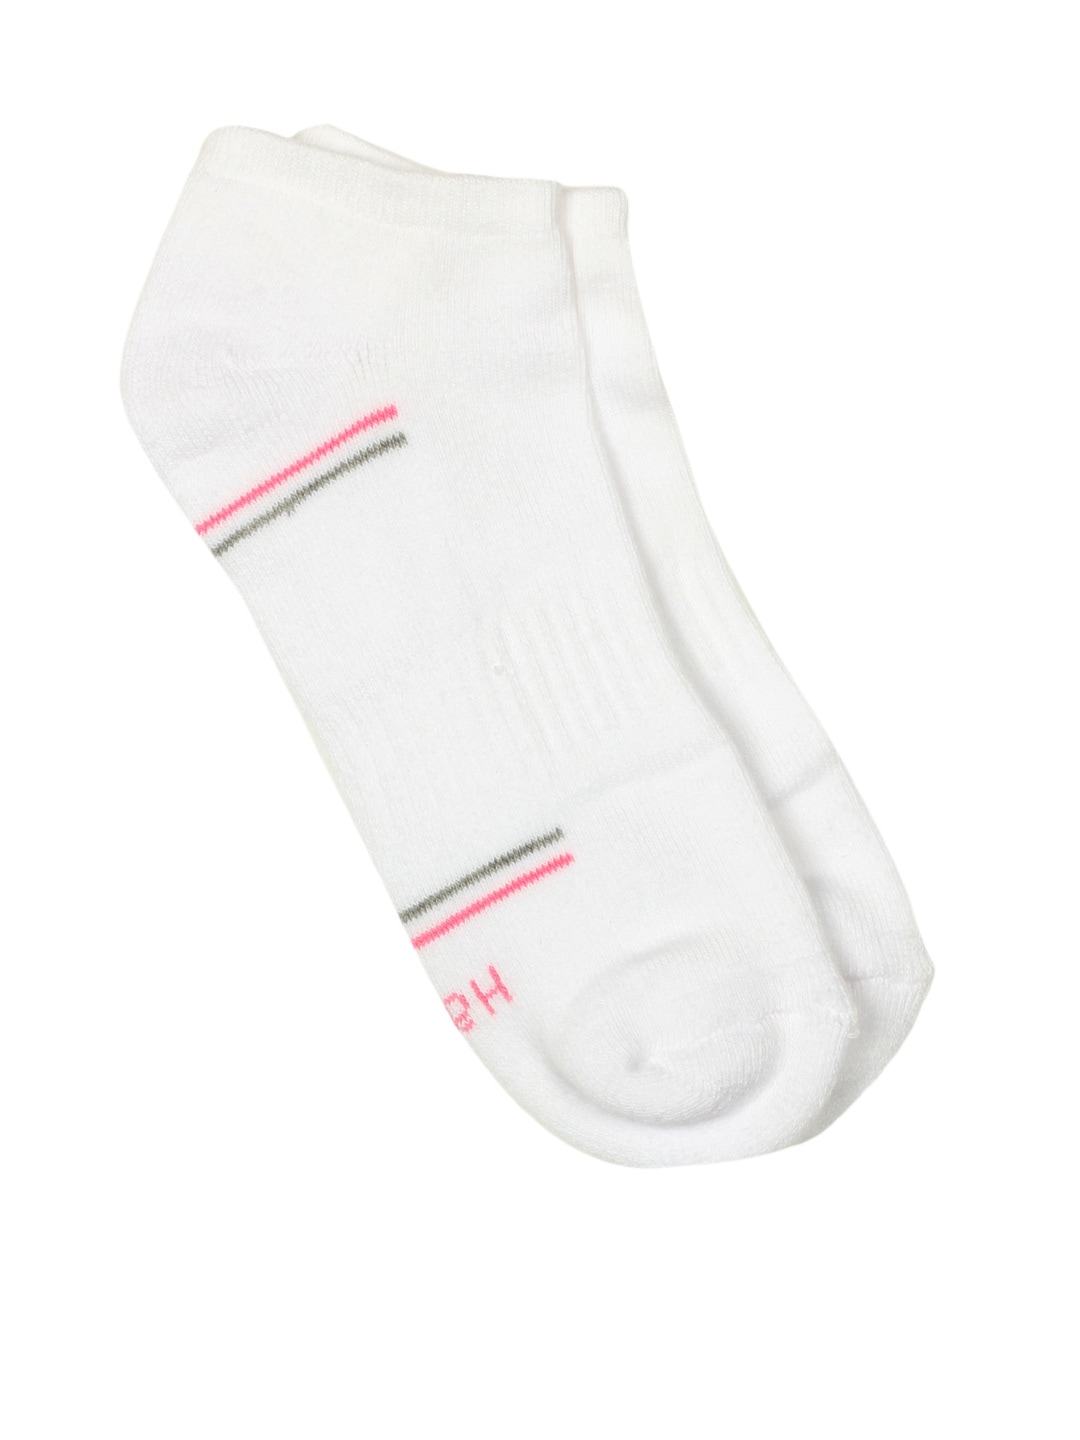 Hanes Women Assorted Socks